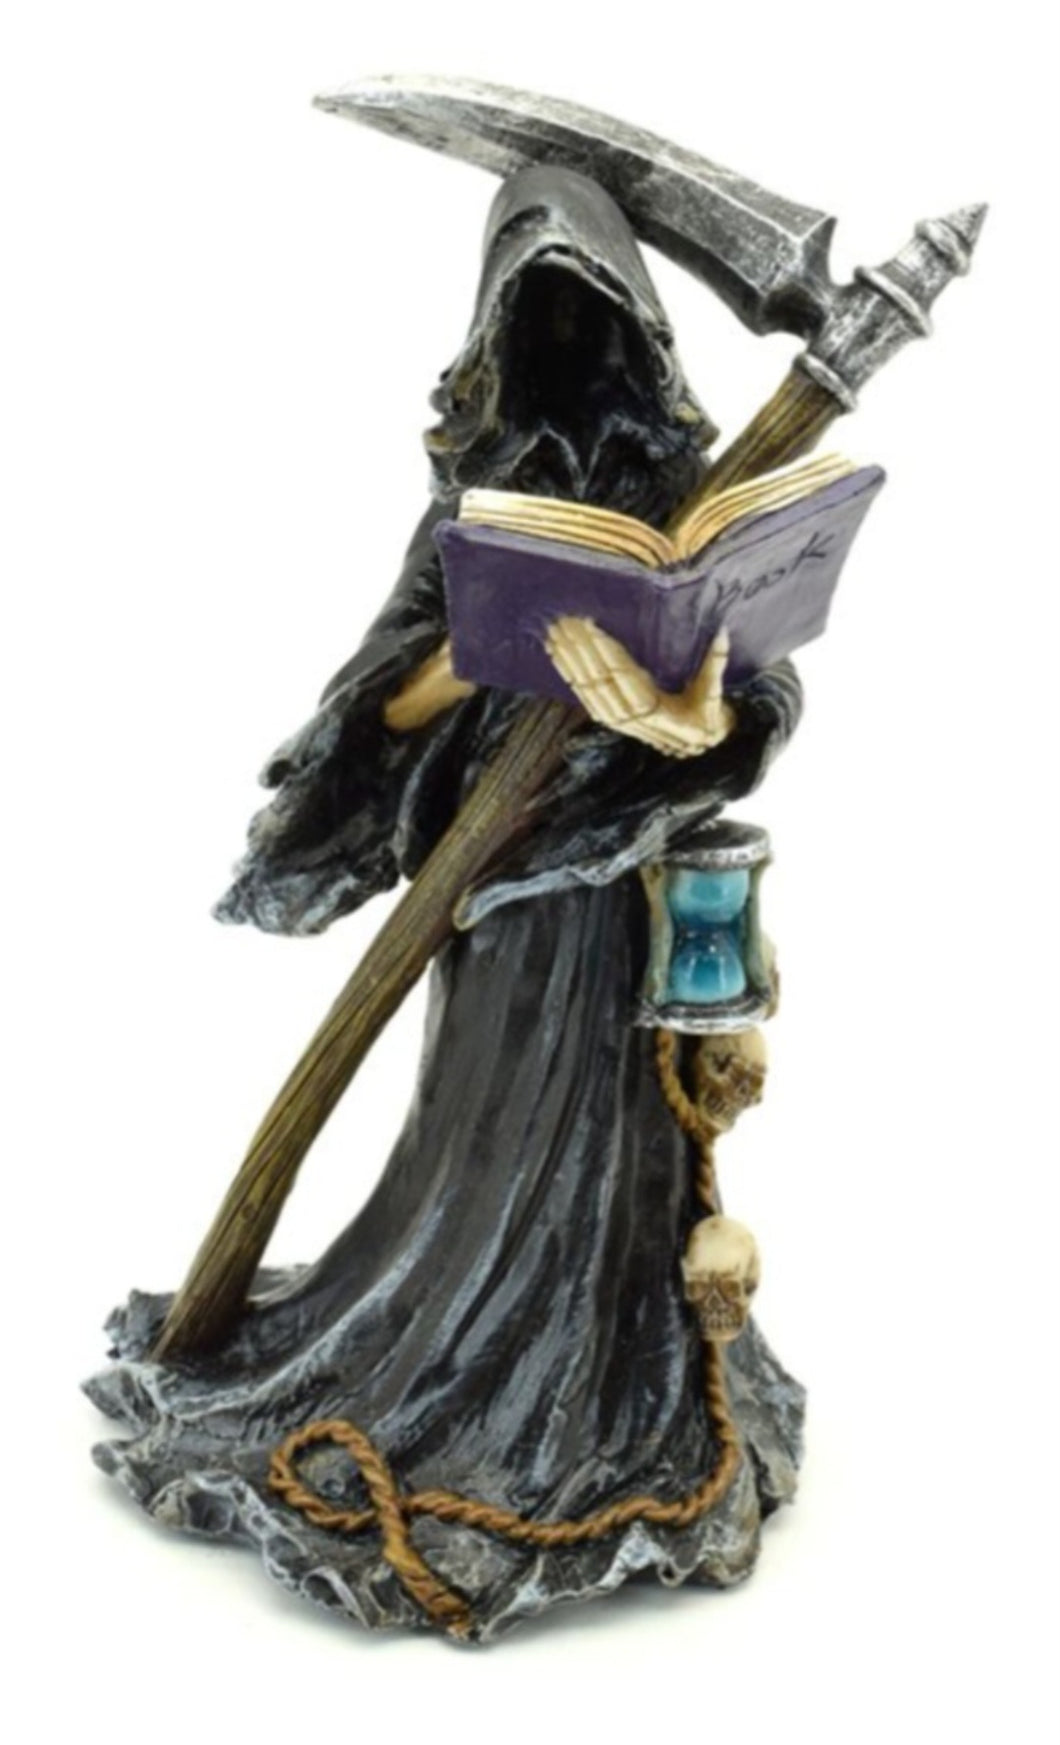 The Reaper Figurine